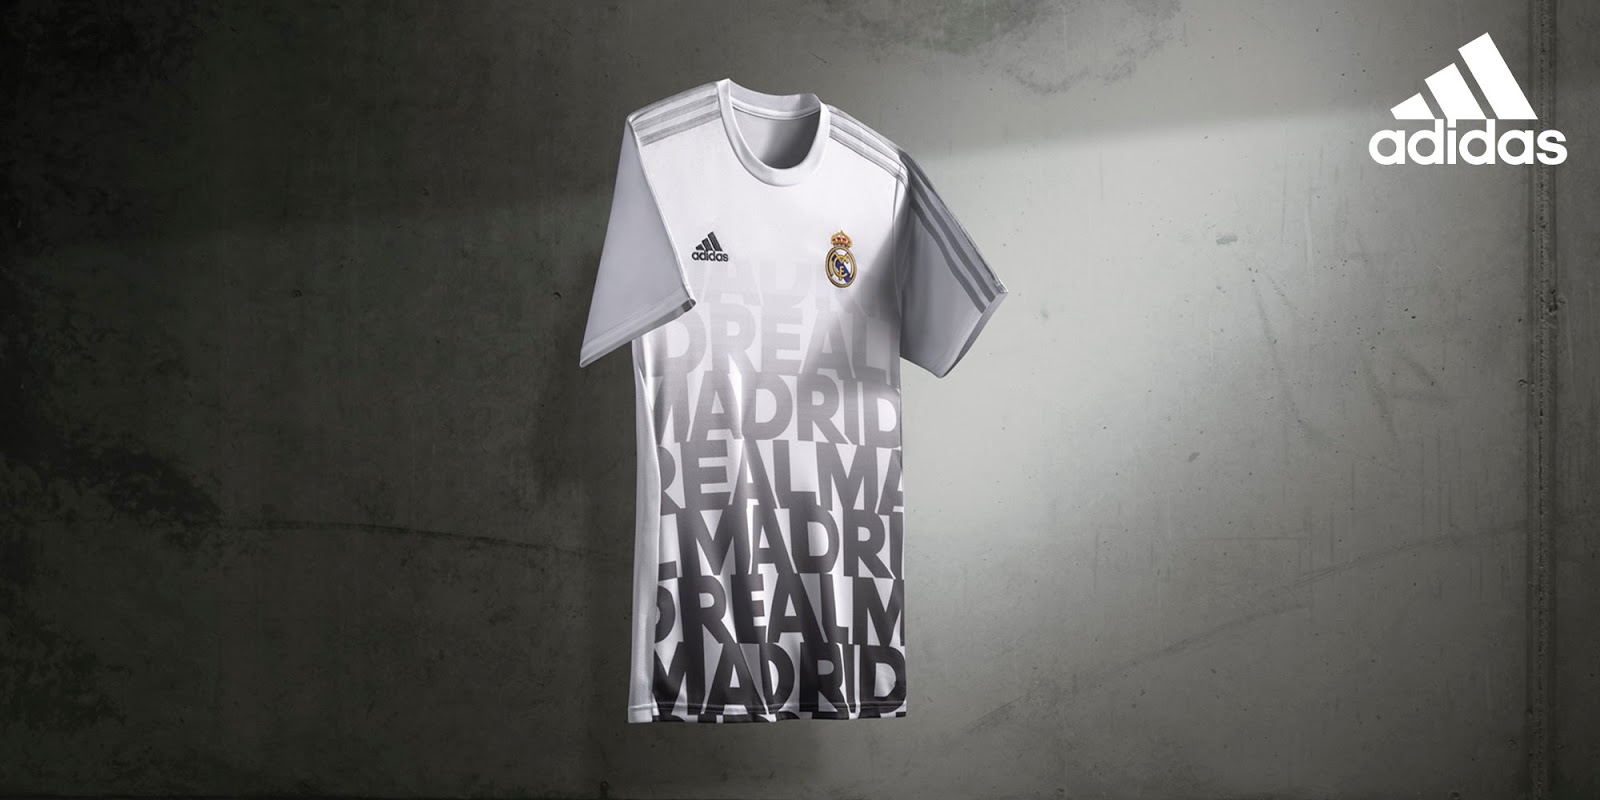 fluit Reciteren formule Real Madrid 2016 Pre-Match Shirt Released - Footy Headlines